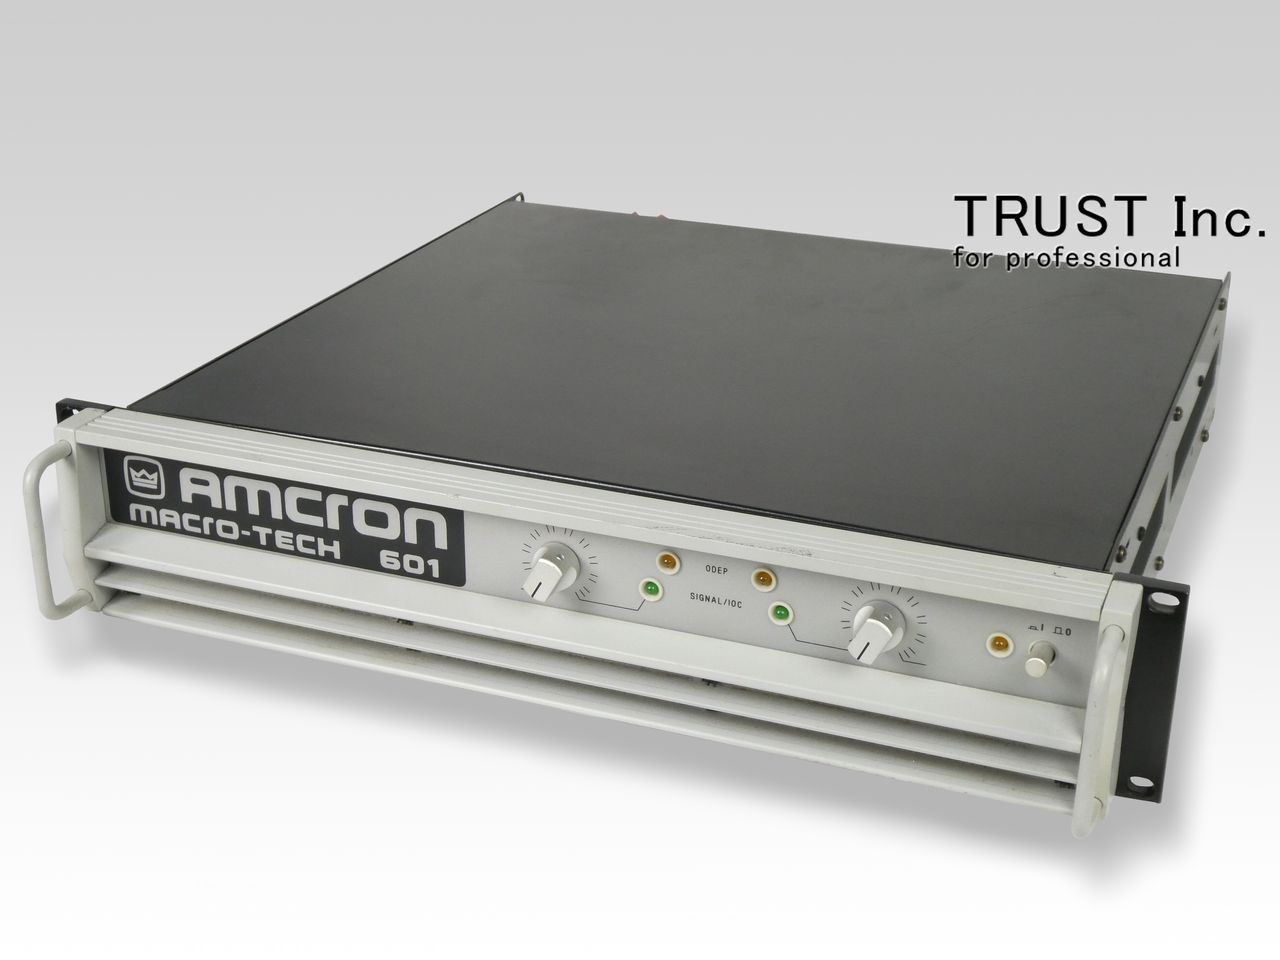 crown amcron microtech 601 - アンプ